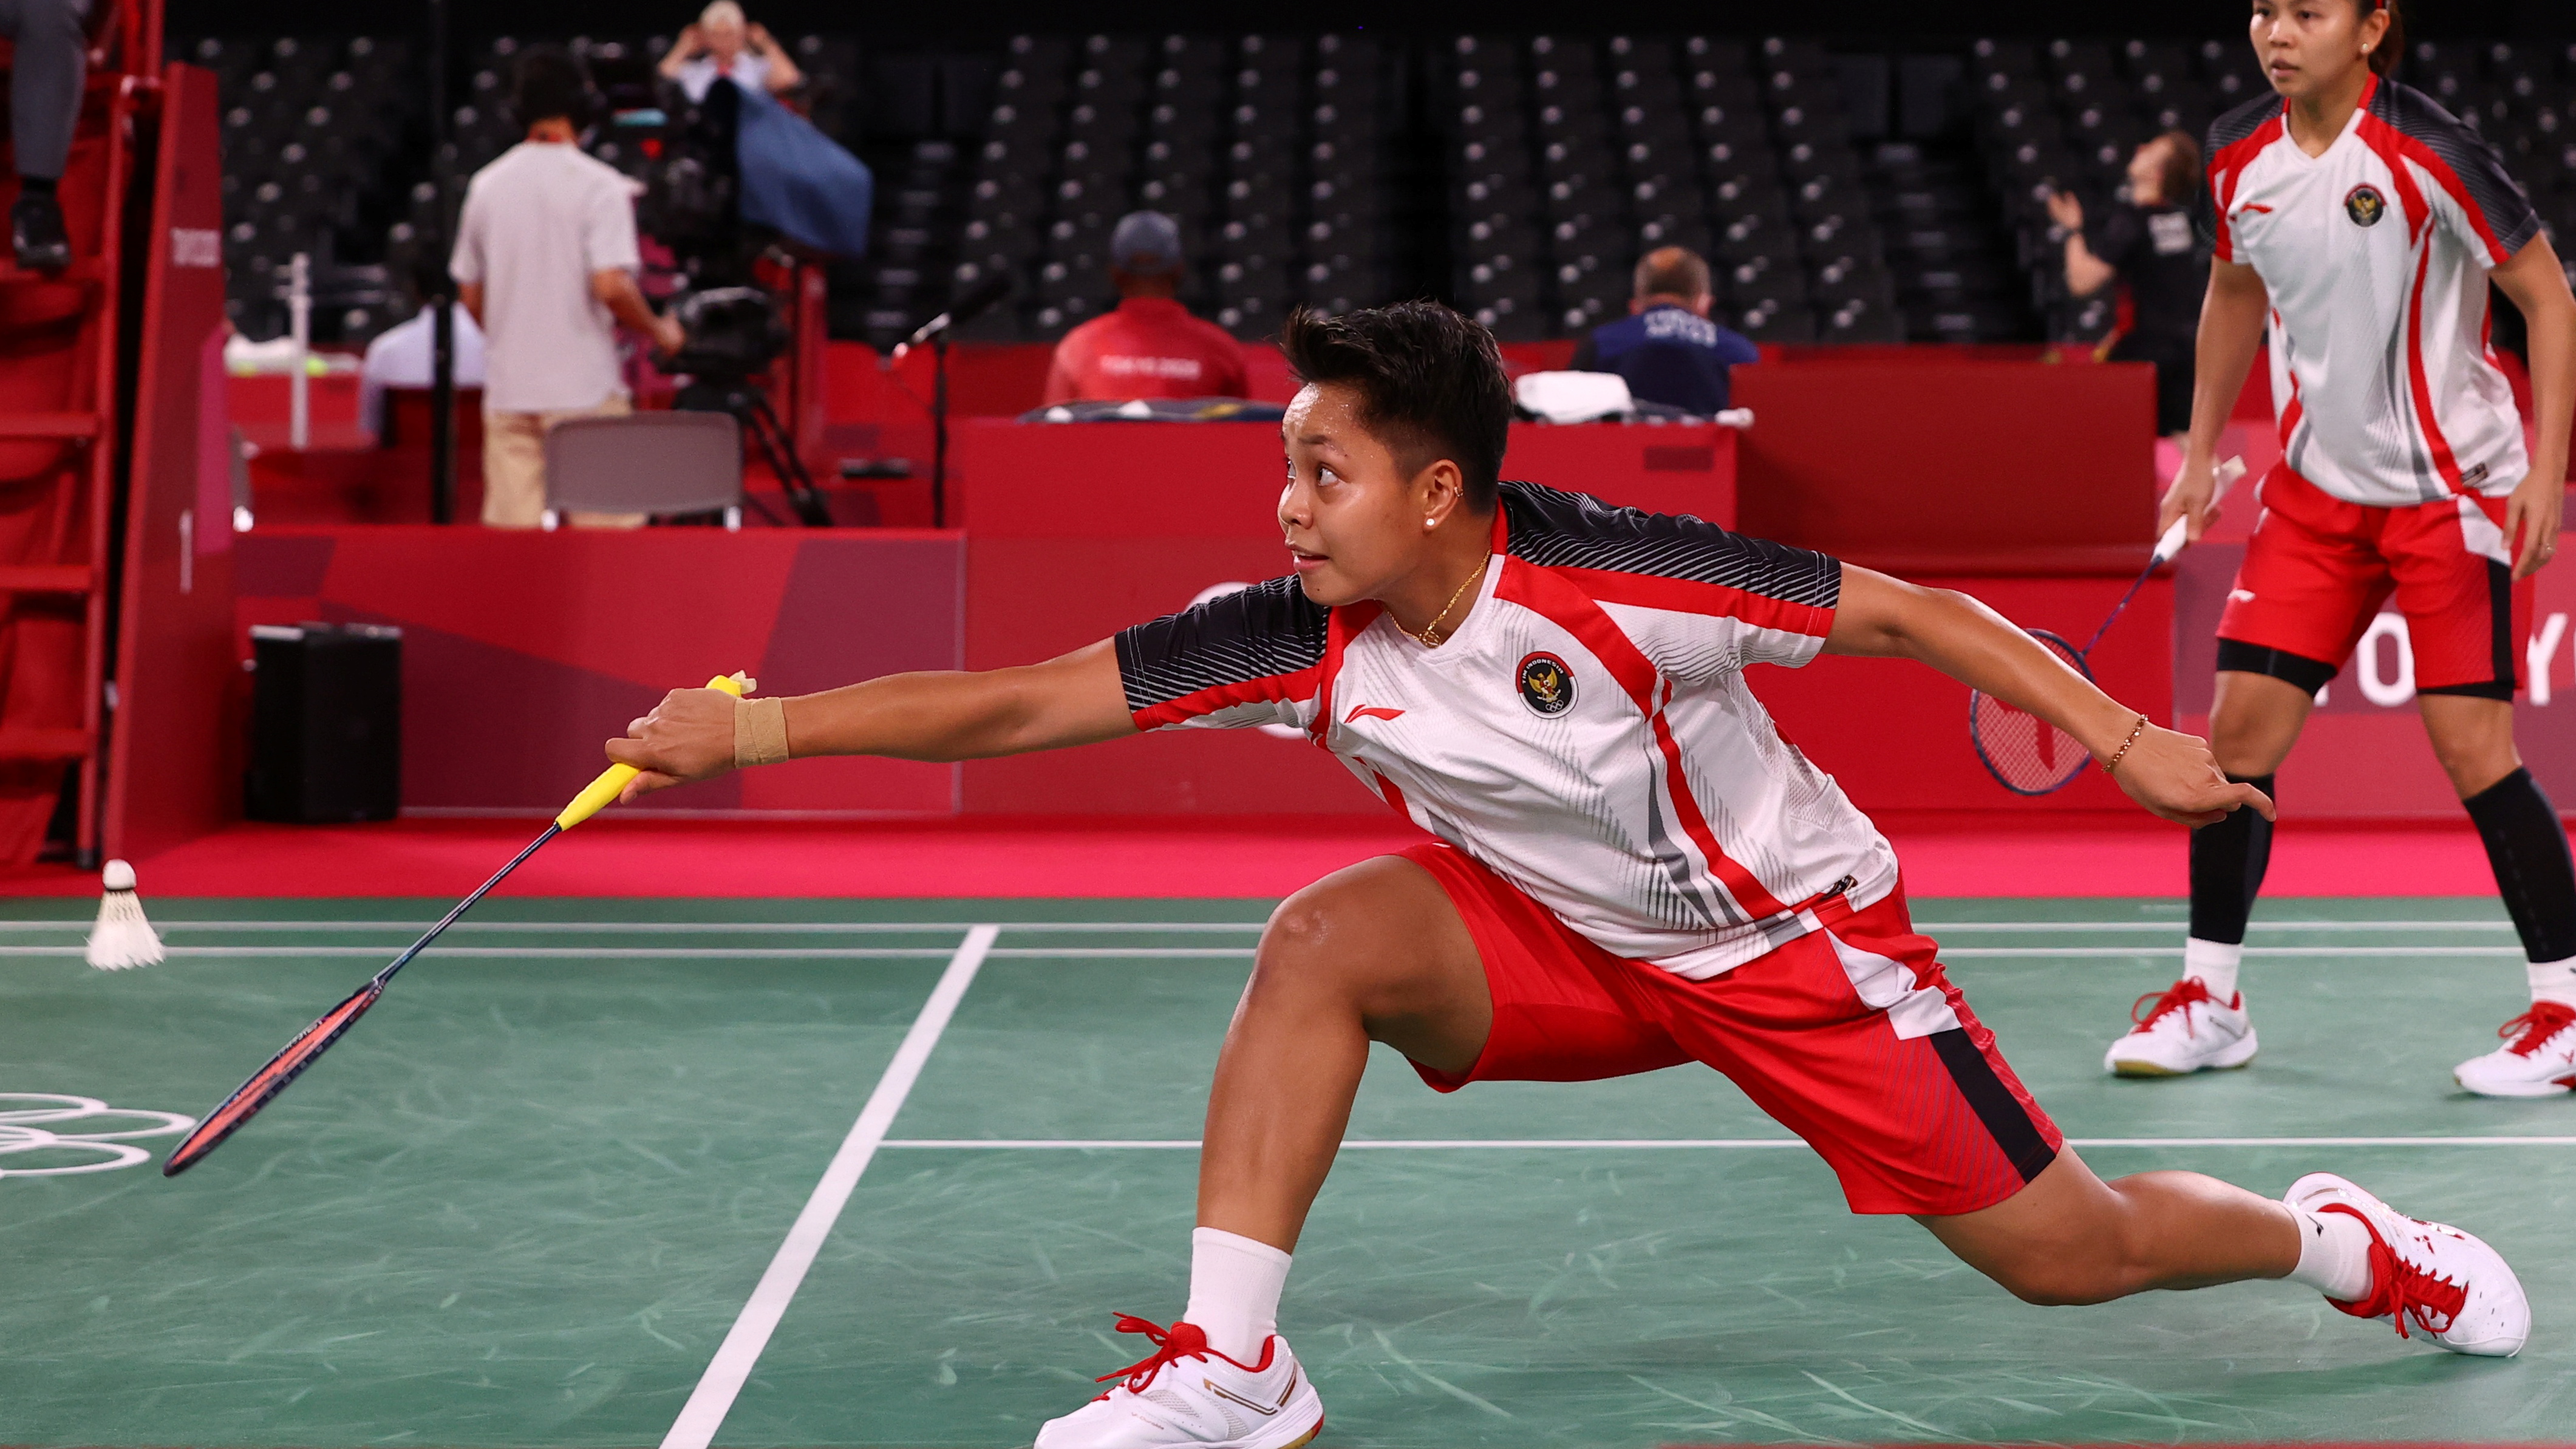 Badminton rahayu Indonesia breaks